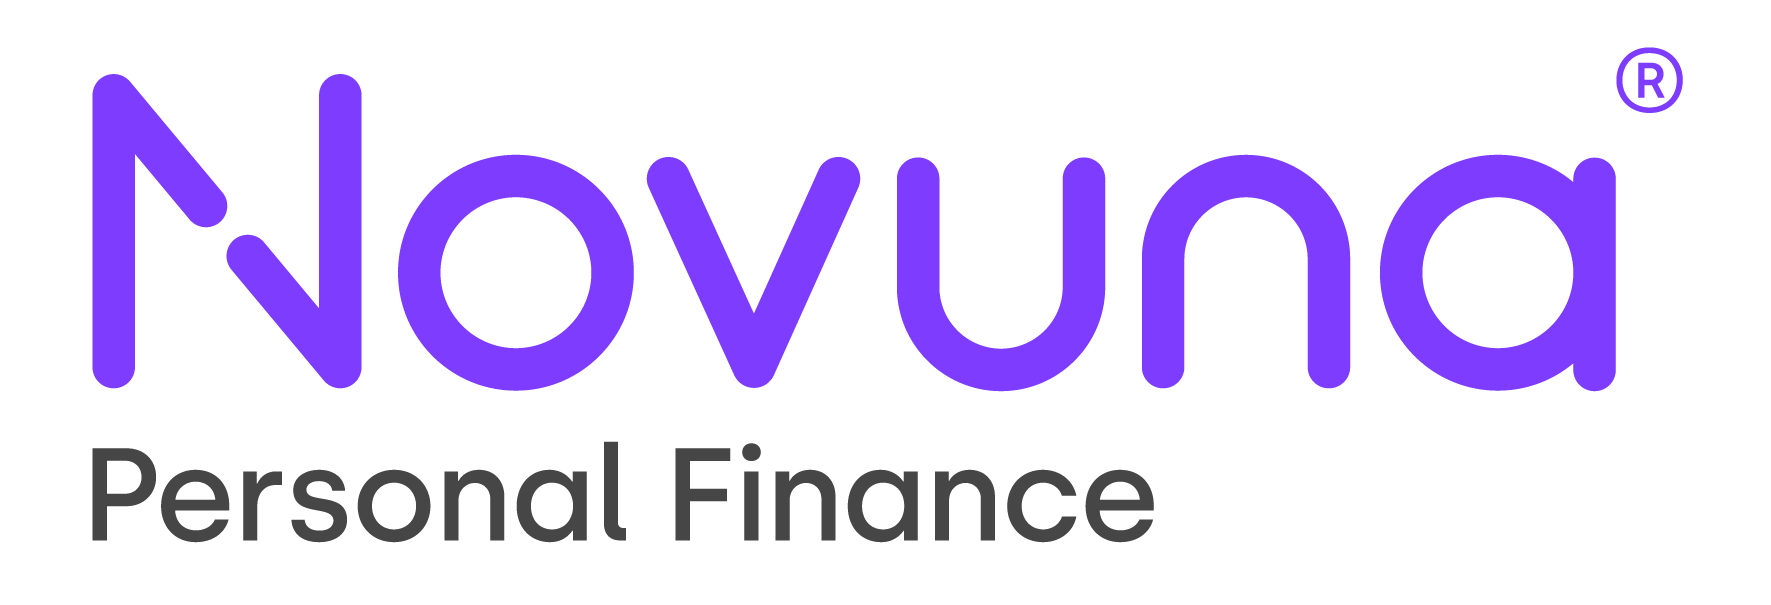 Novuna's, provider of personal finance, logo